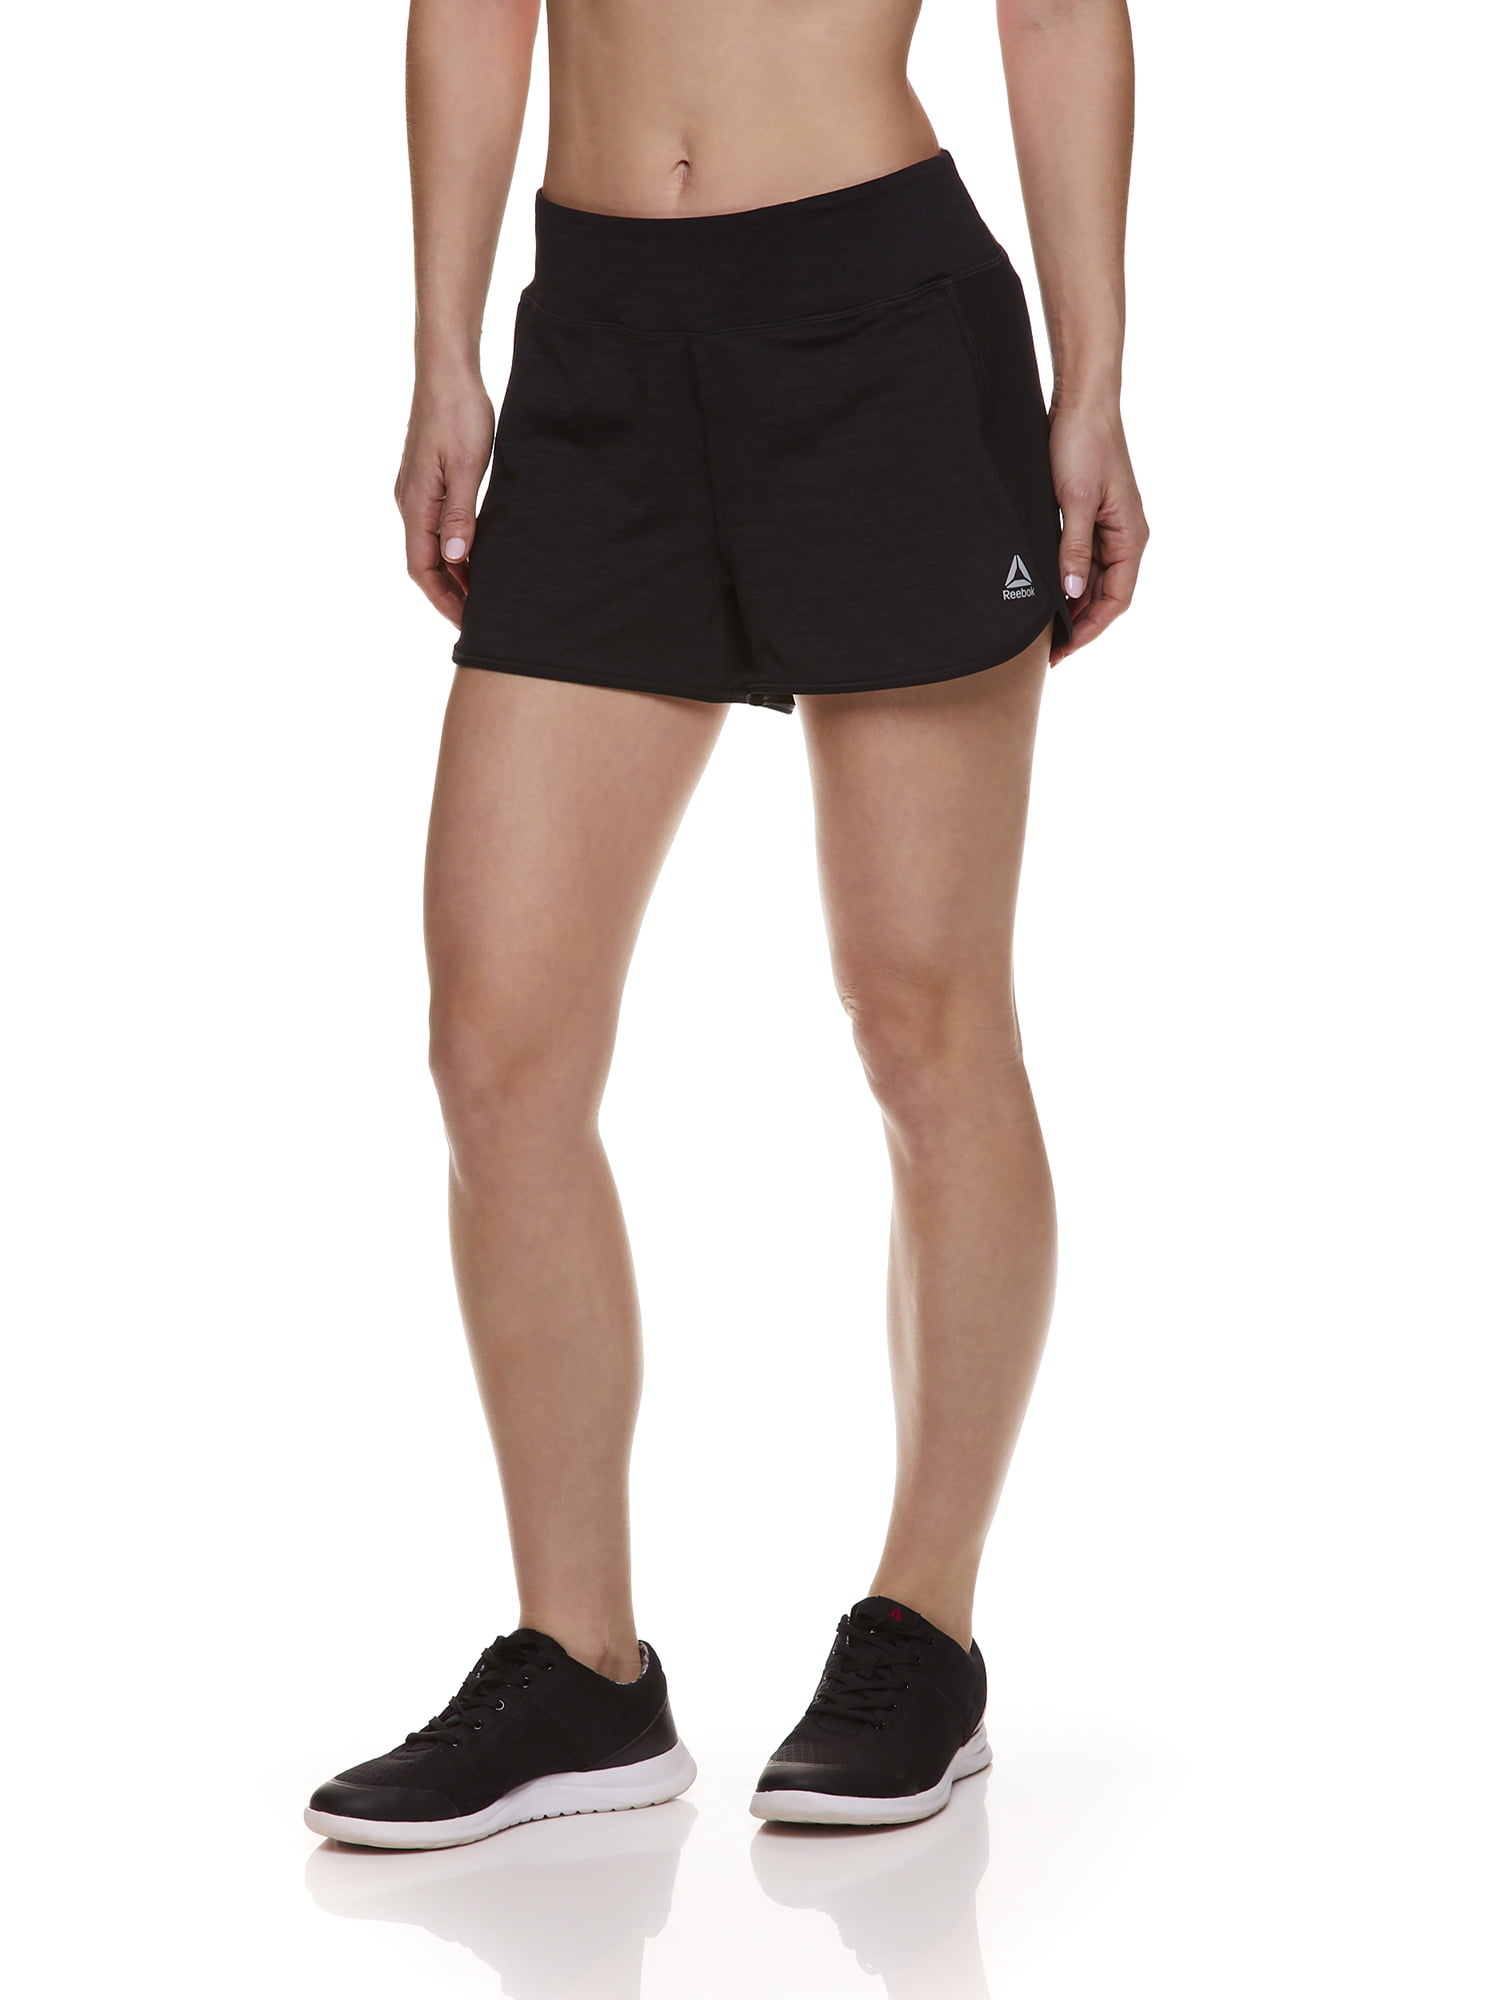 Reebok Women's Athletic Running Shorts, 3.5" Inseam Walmart.com